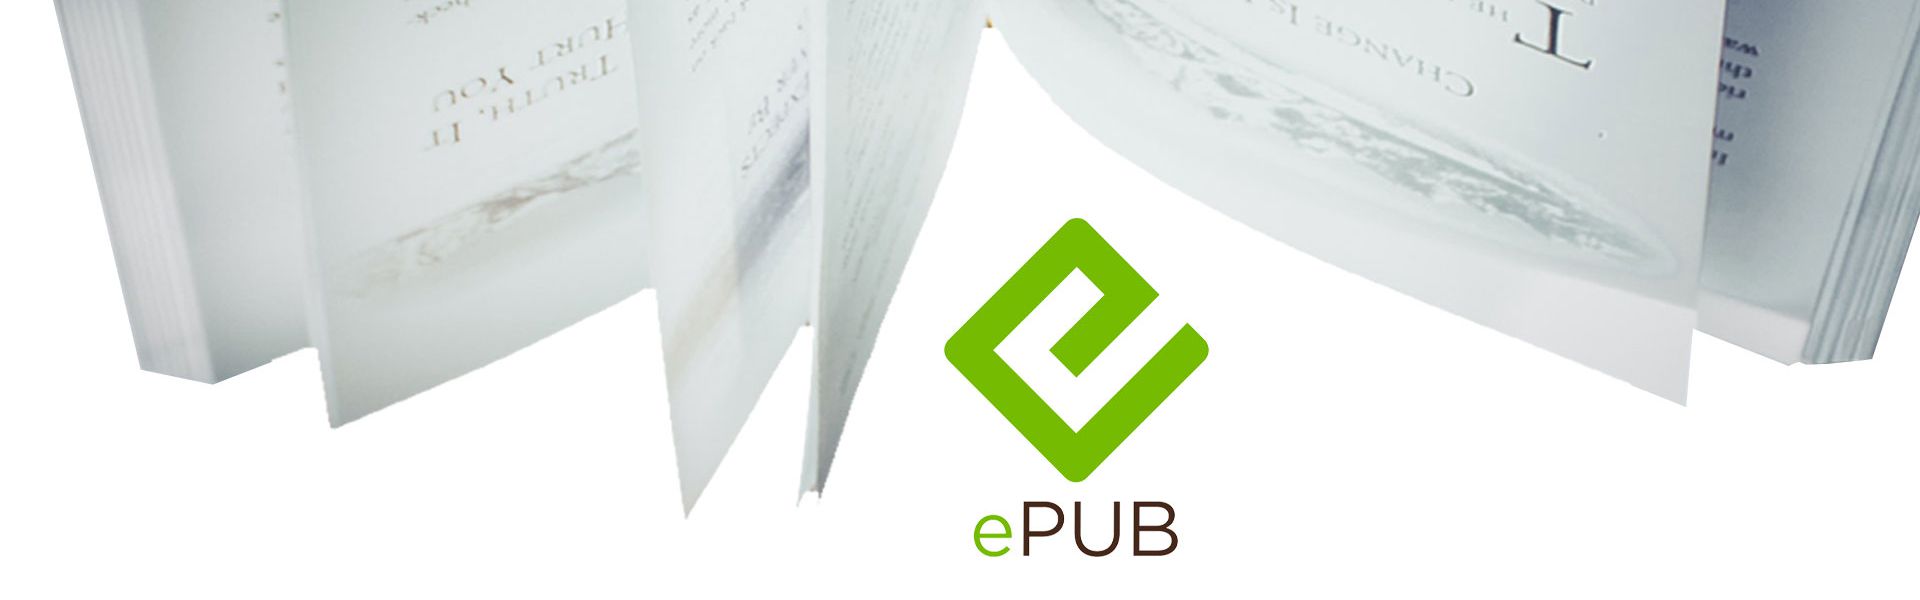 Reflowable ePUB: dé publicatievorm voor online apparaten